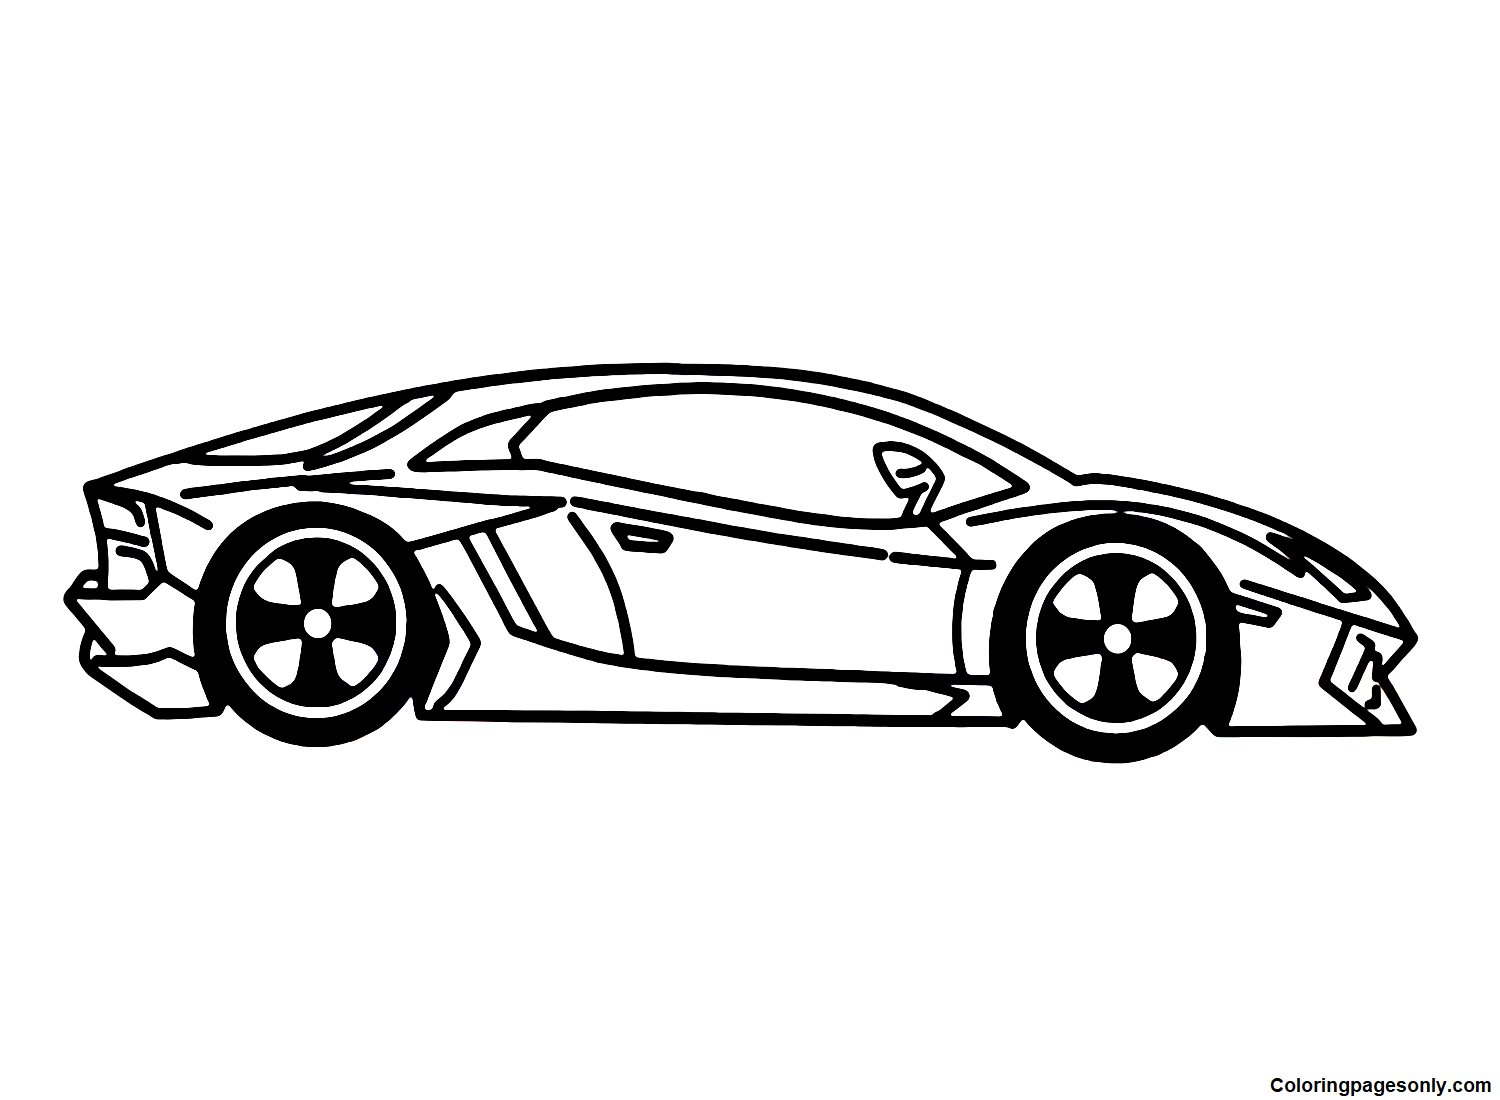 Lamborghini Livre da Lamborghini